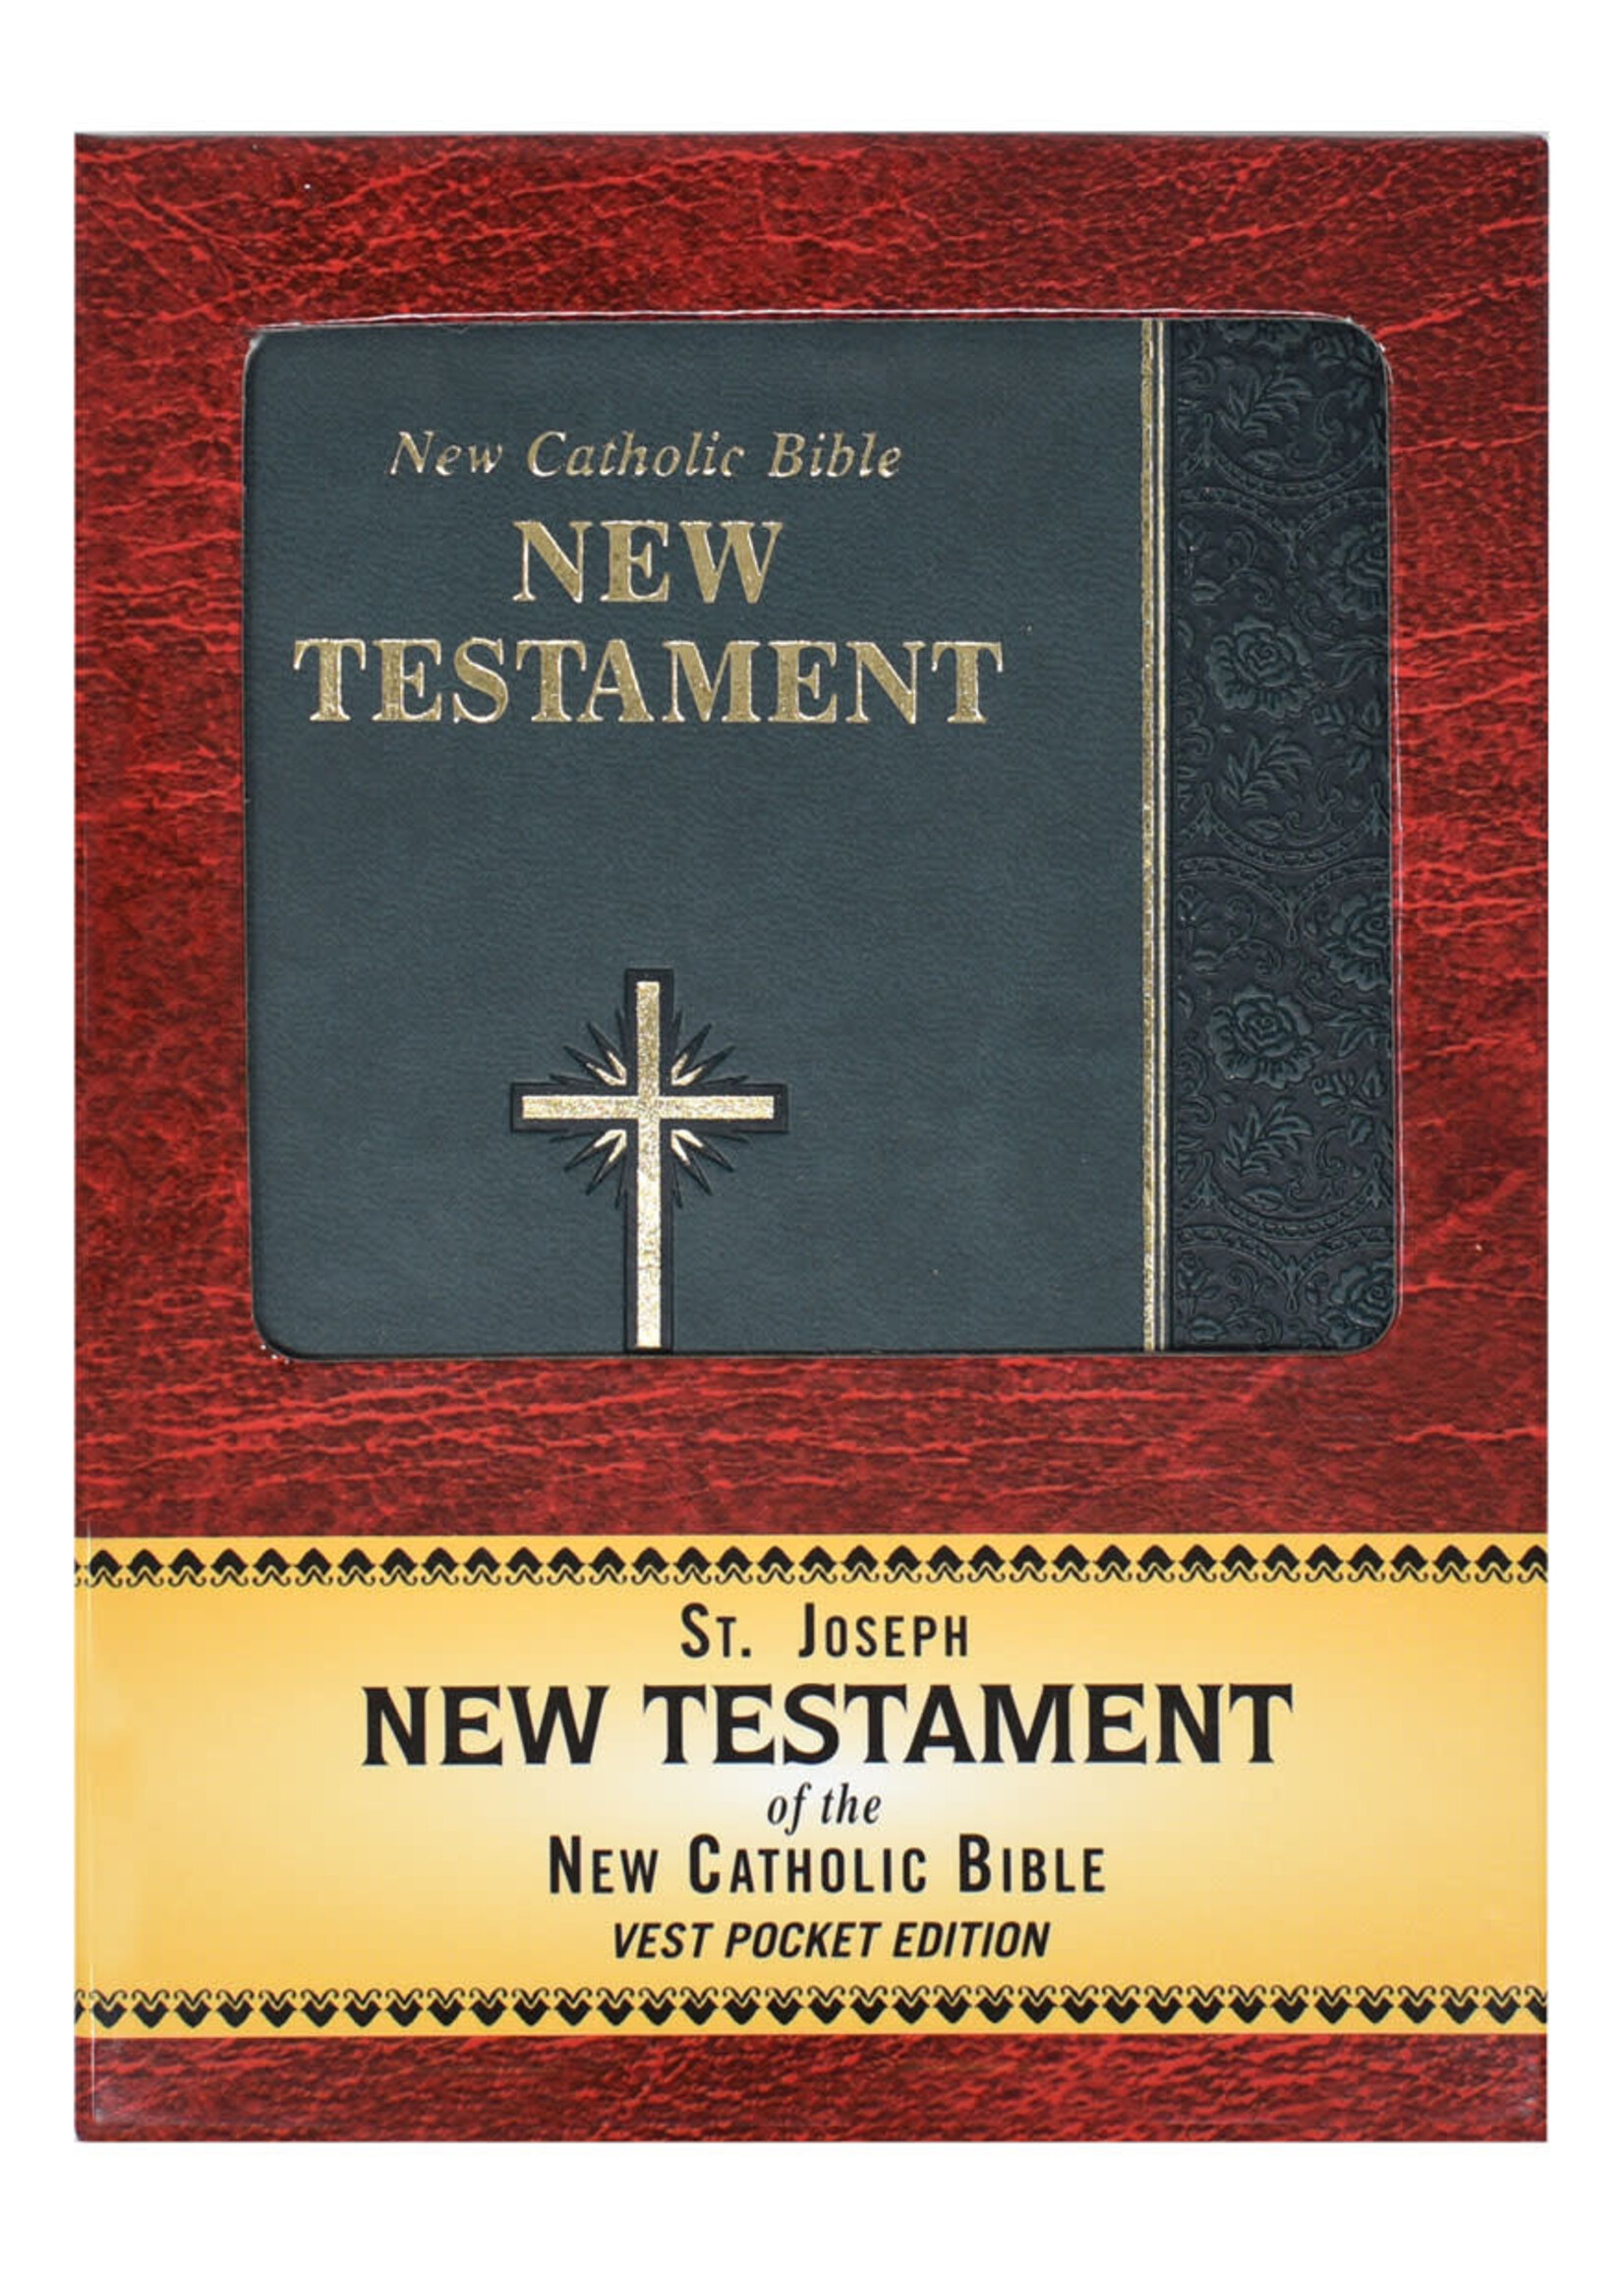 St Joseph New Catholic Bible New Testament